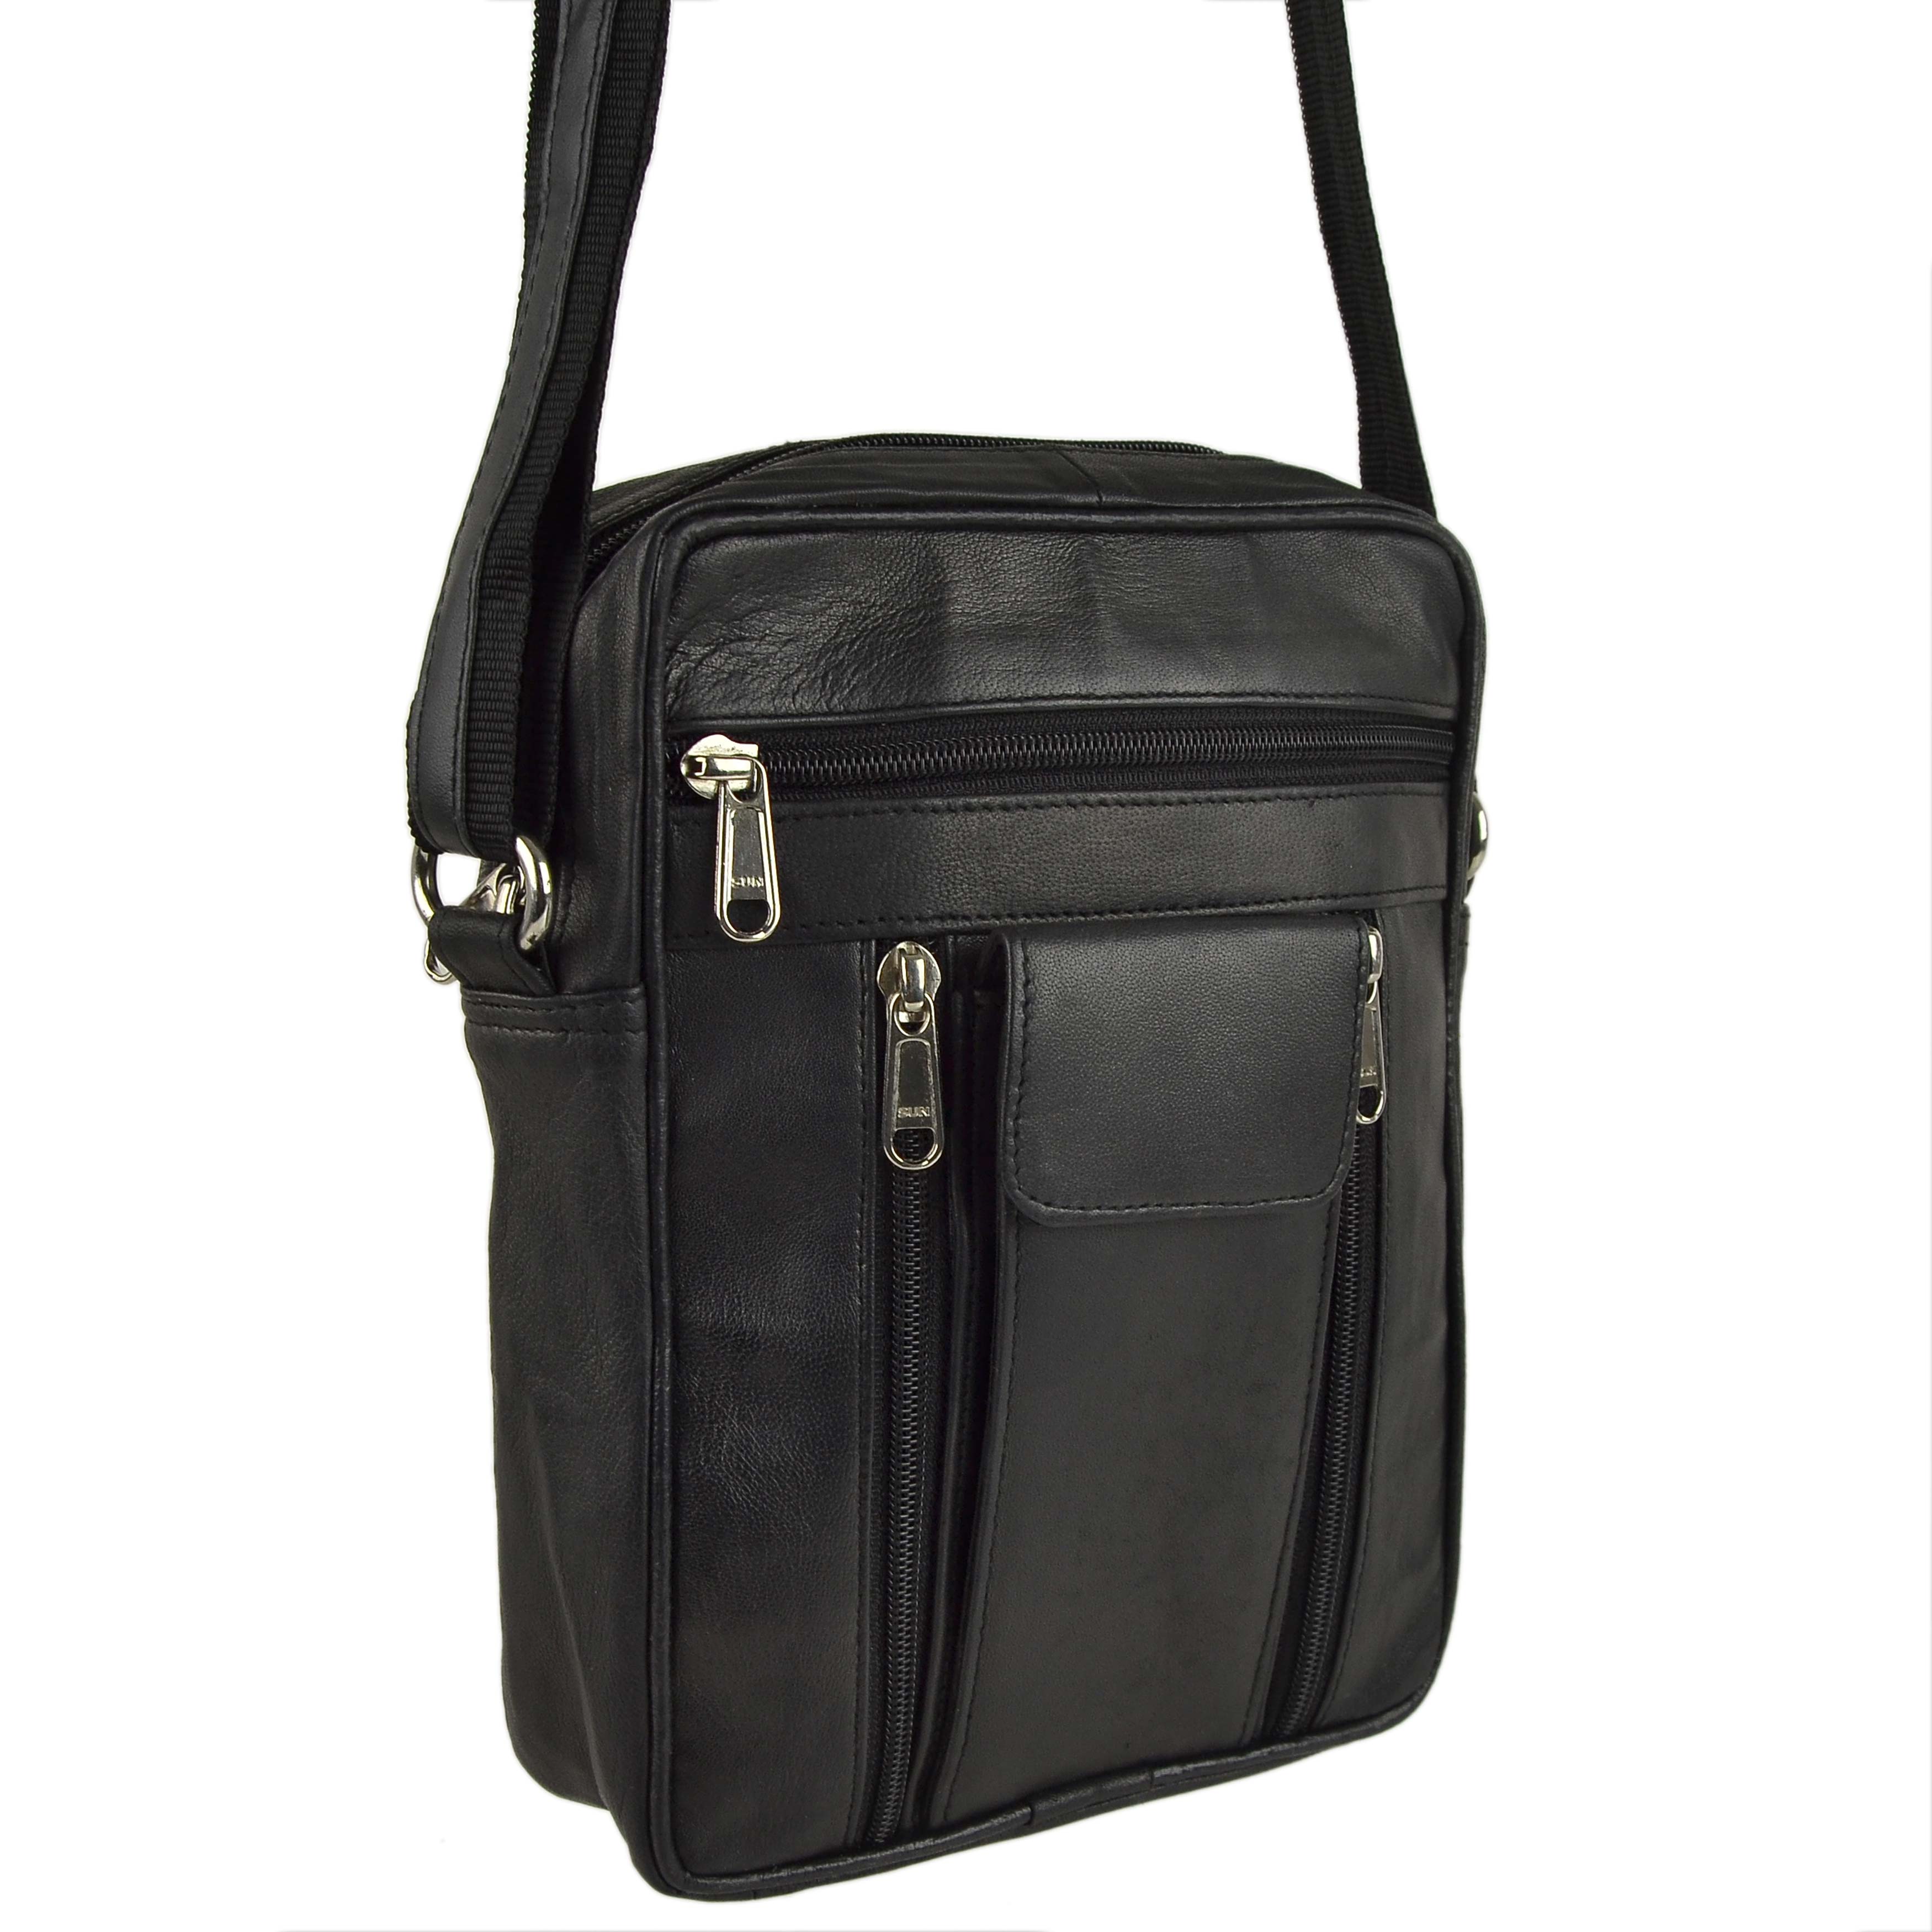 Gents Black Leaher Handy Cross Body Travel Bag Man Bag by Prime Hide ...